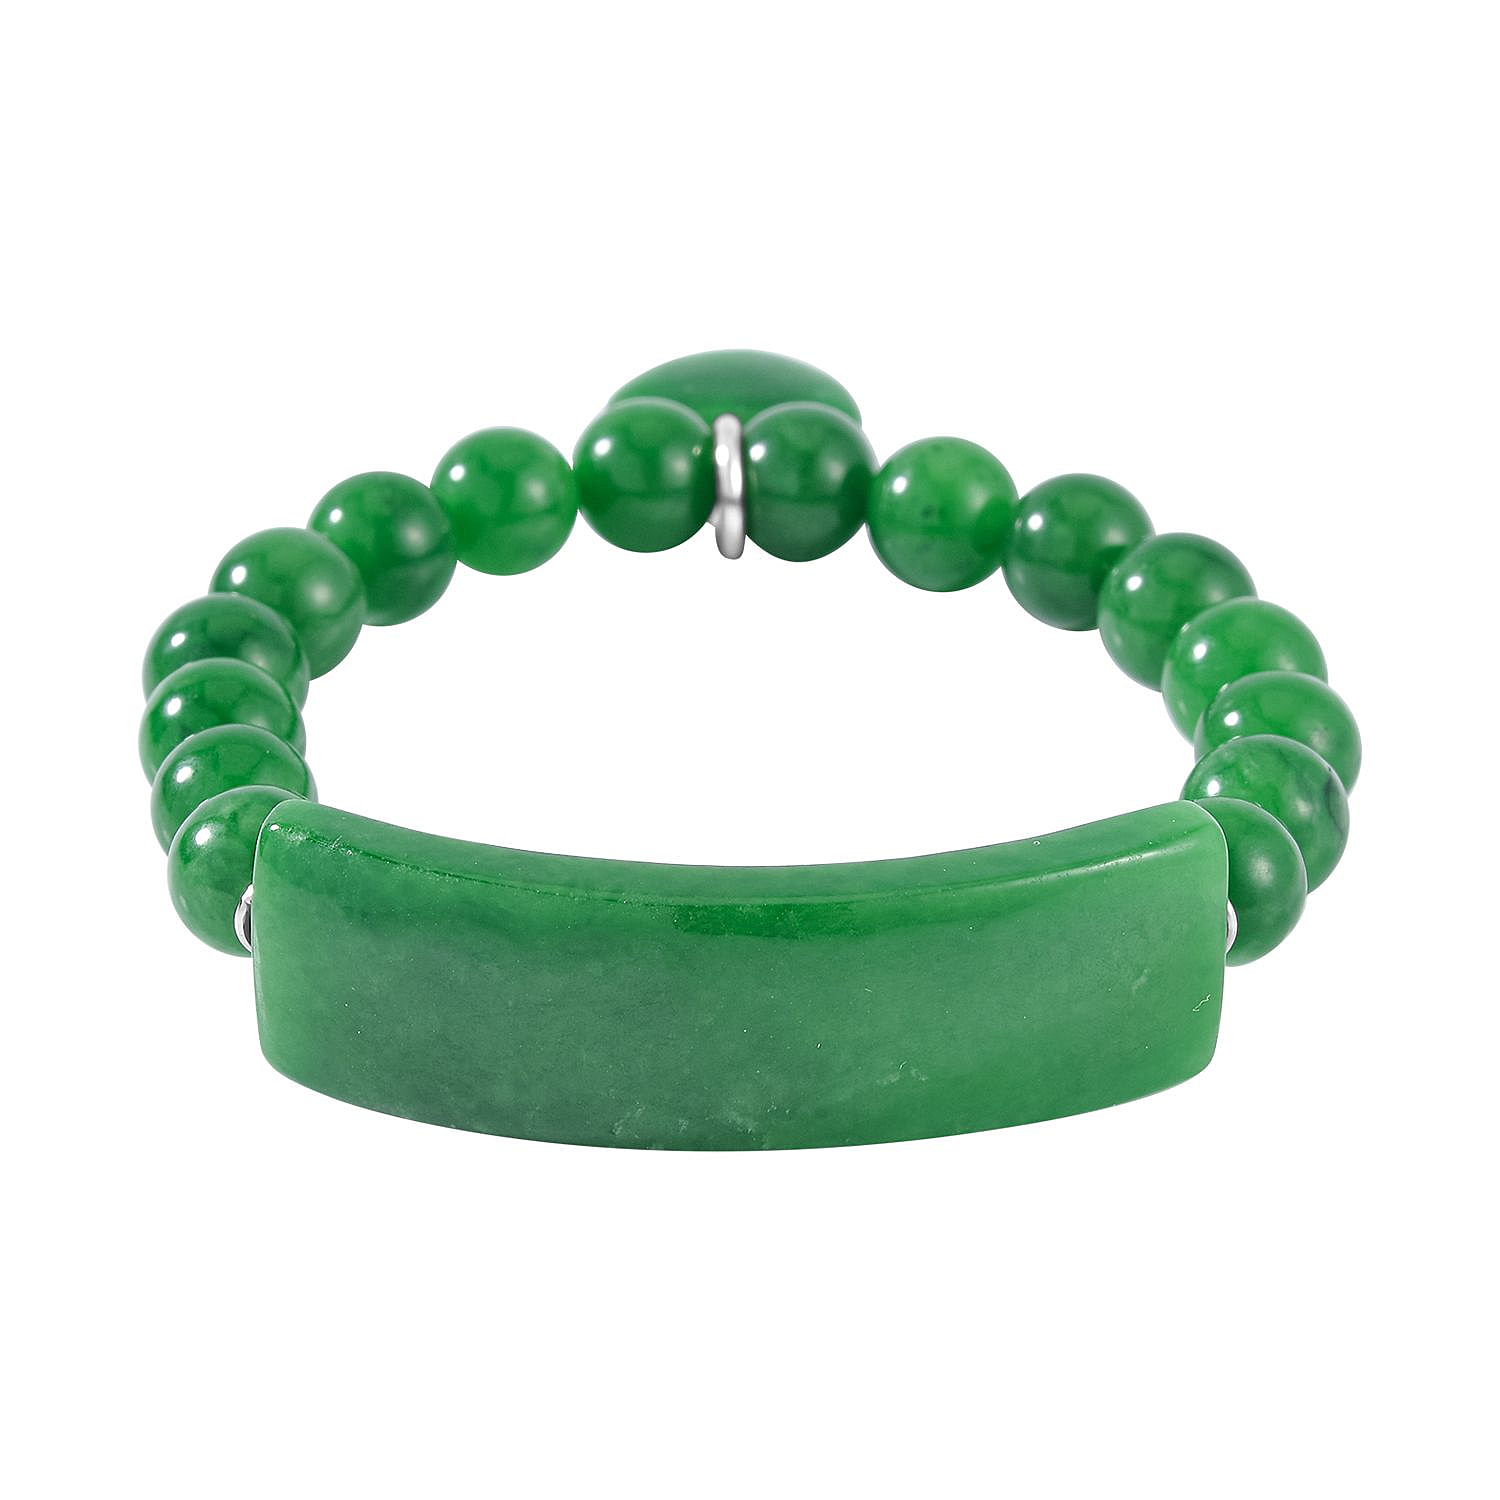 Hand Carved Green Jadeite Jade Bracelet in Rhodium Overlay Sterling Silver 190.00 Ct.